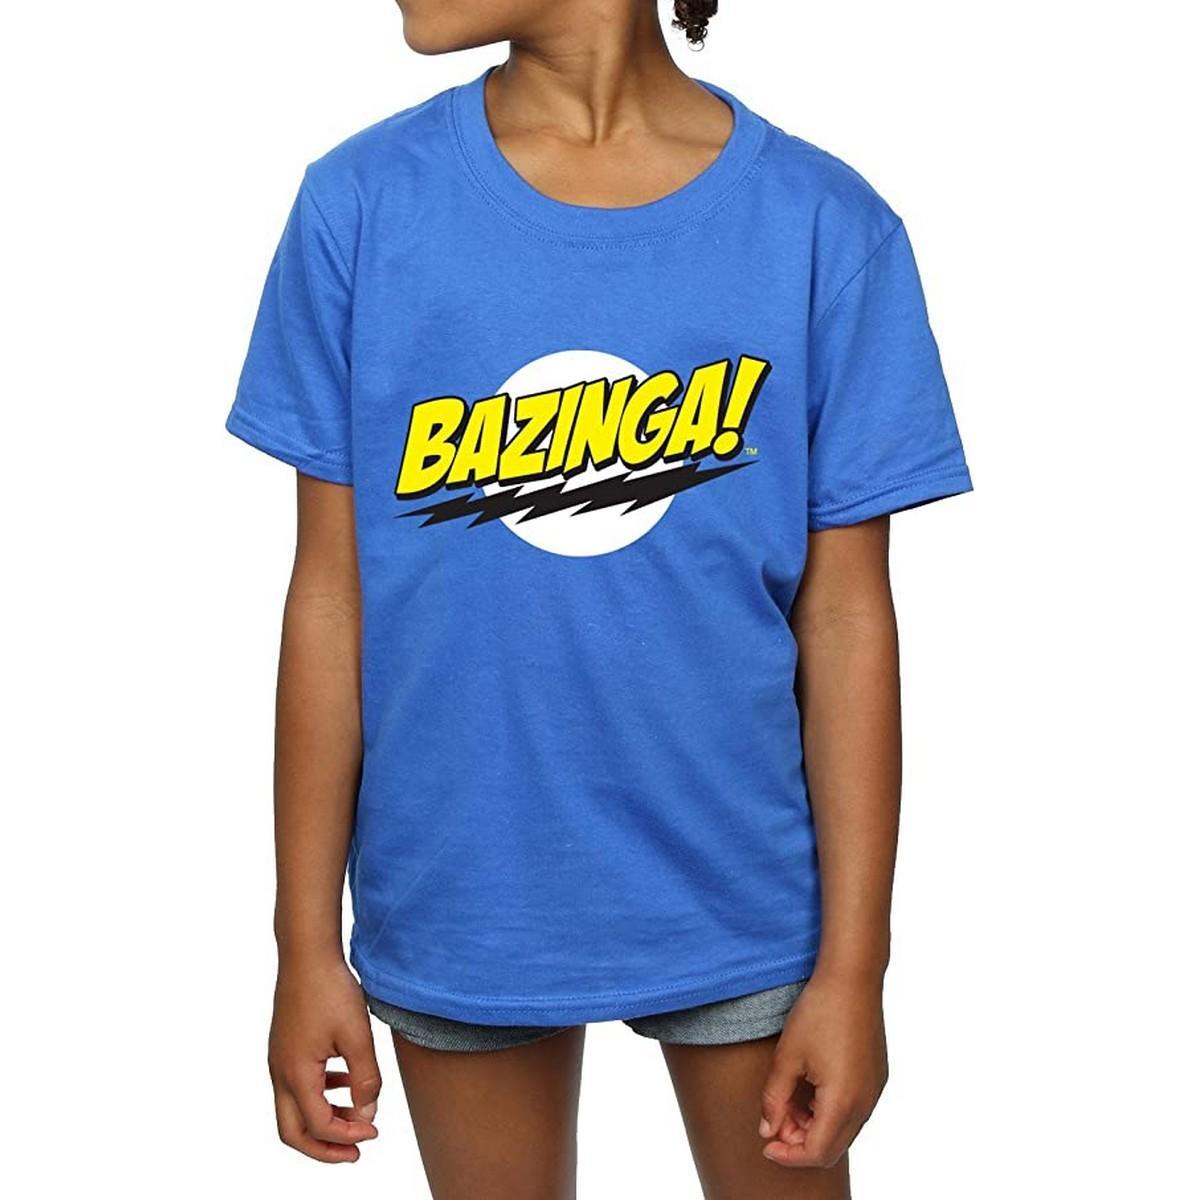 The Big Bang Theory Girls Bazinga Cotton T-Shirt (Royal Blue) (5-6 Years)